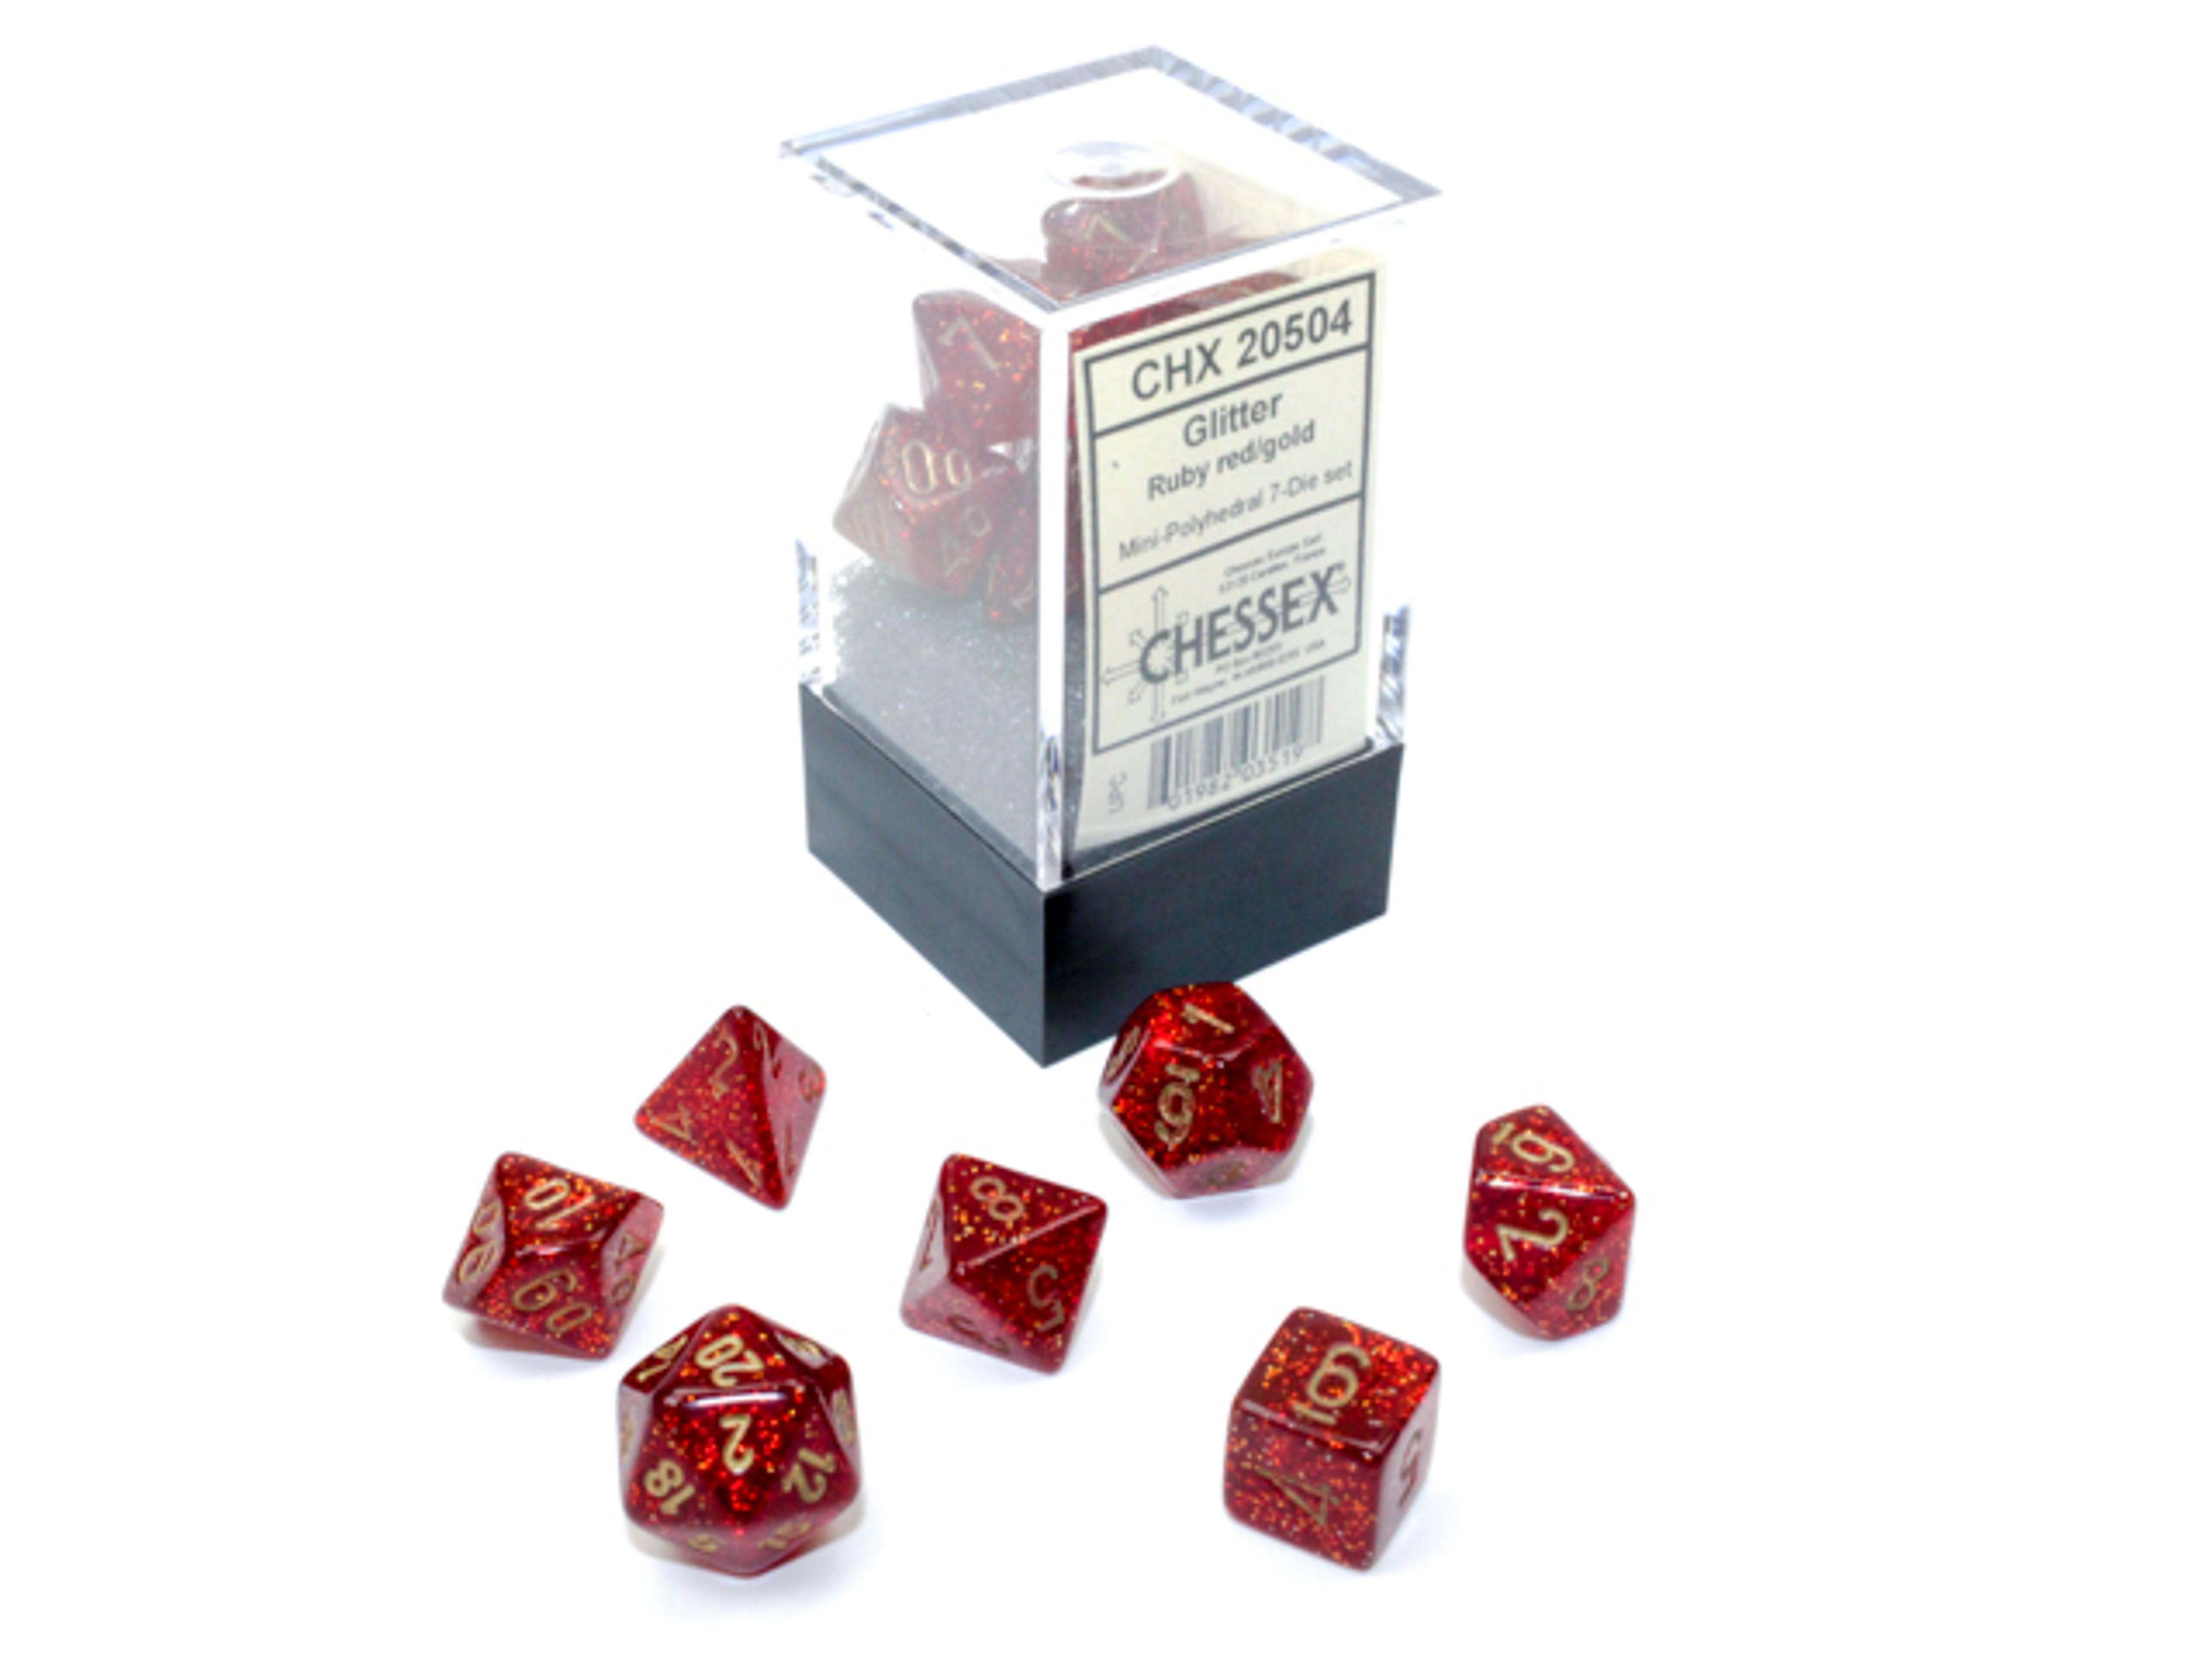 Chessex Glitter Ruby Red Polyhedral 7 Die Set